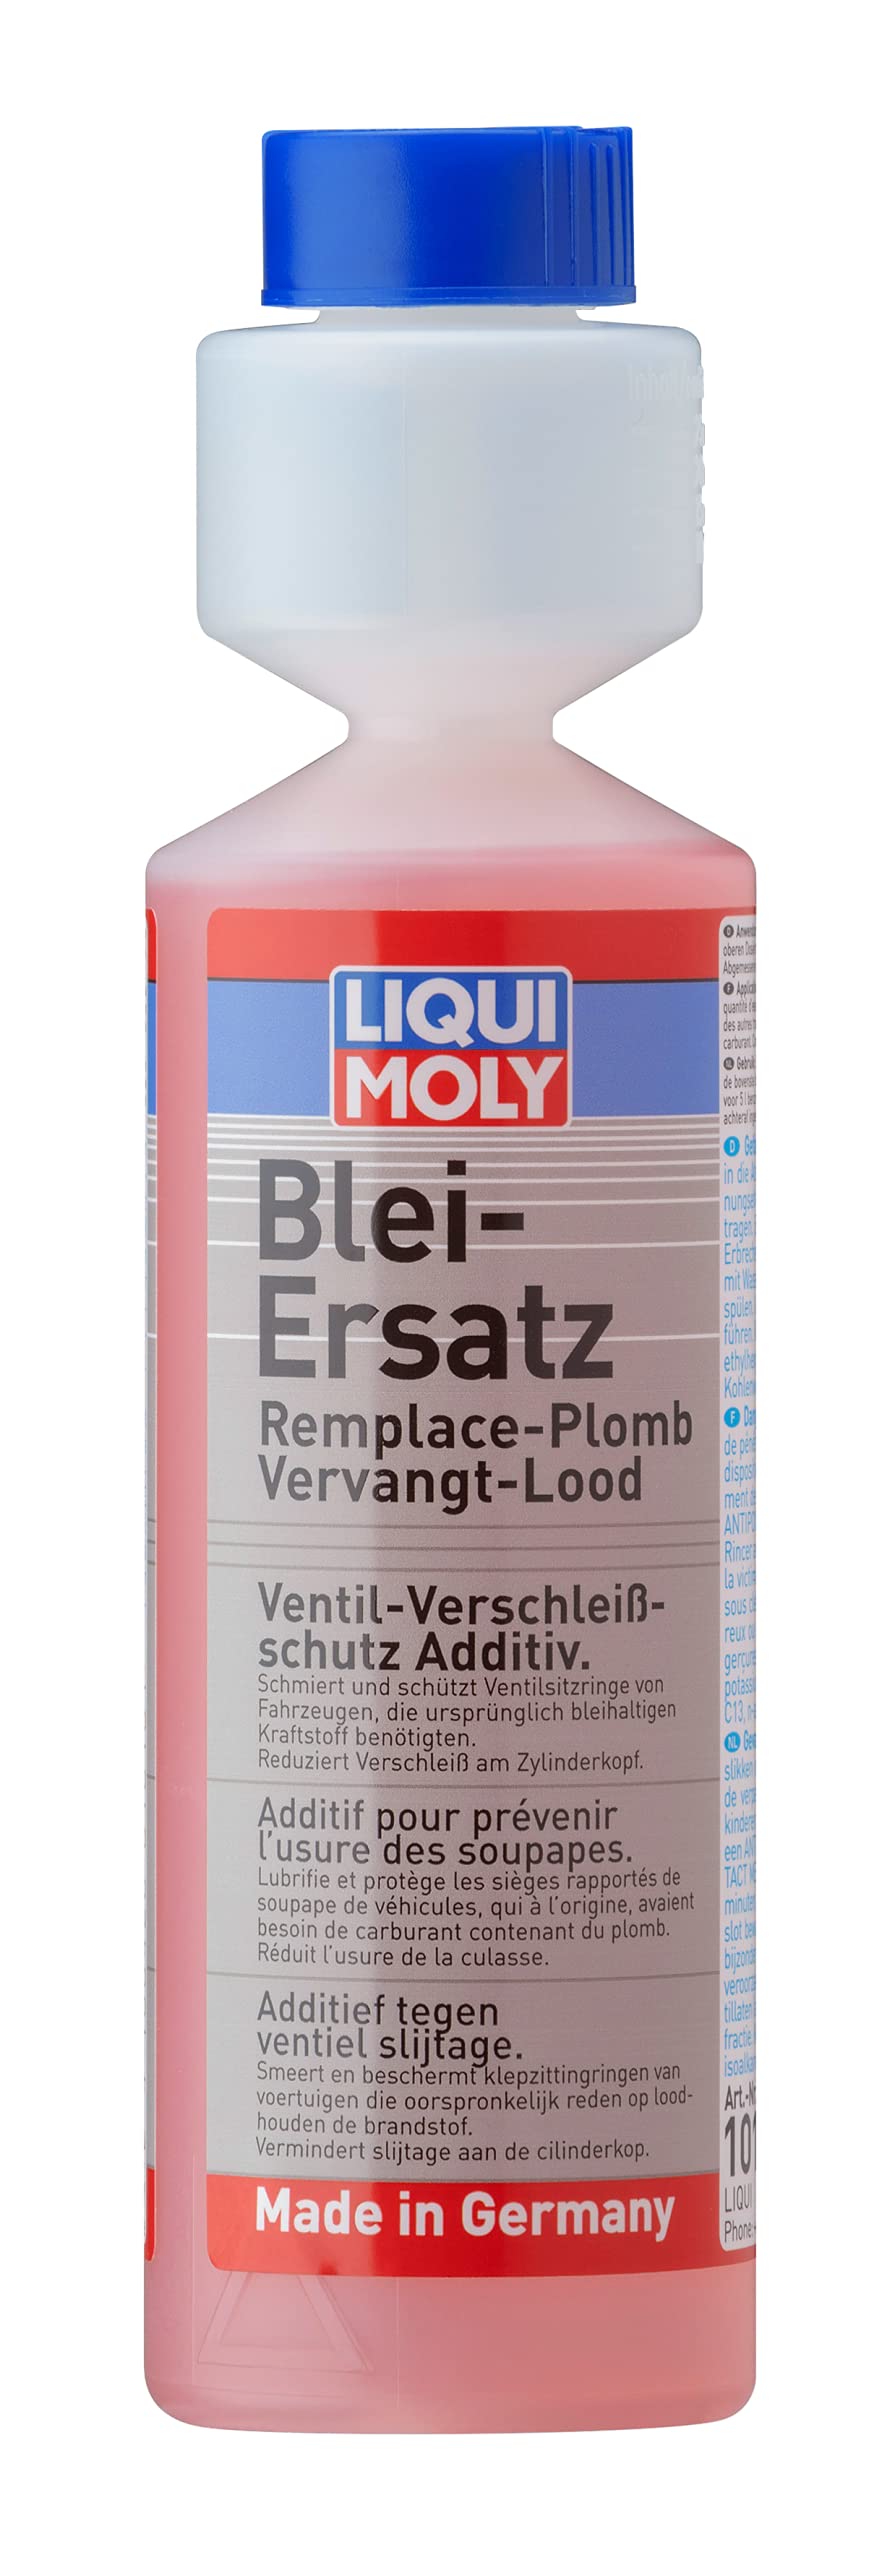 Liqui Moly Blei-Ersatz 1010-250 ml - 6 Stück von LIQUI MOLY GmbH